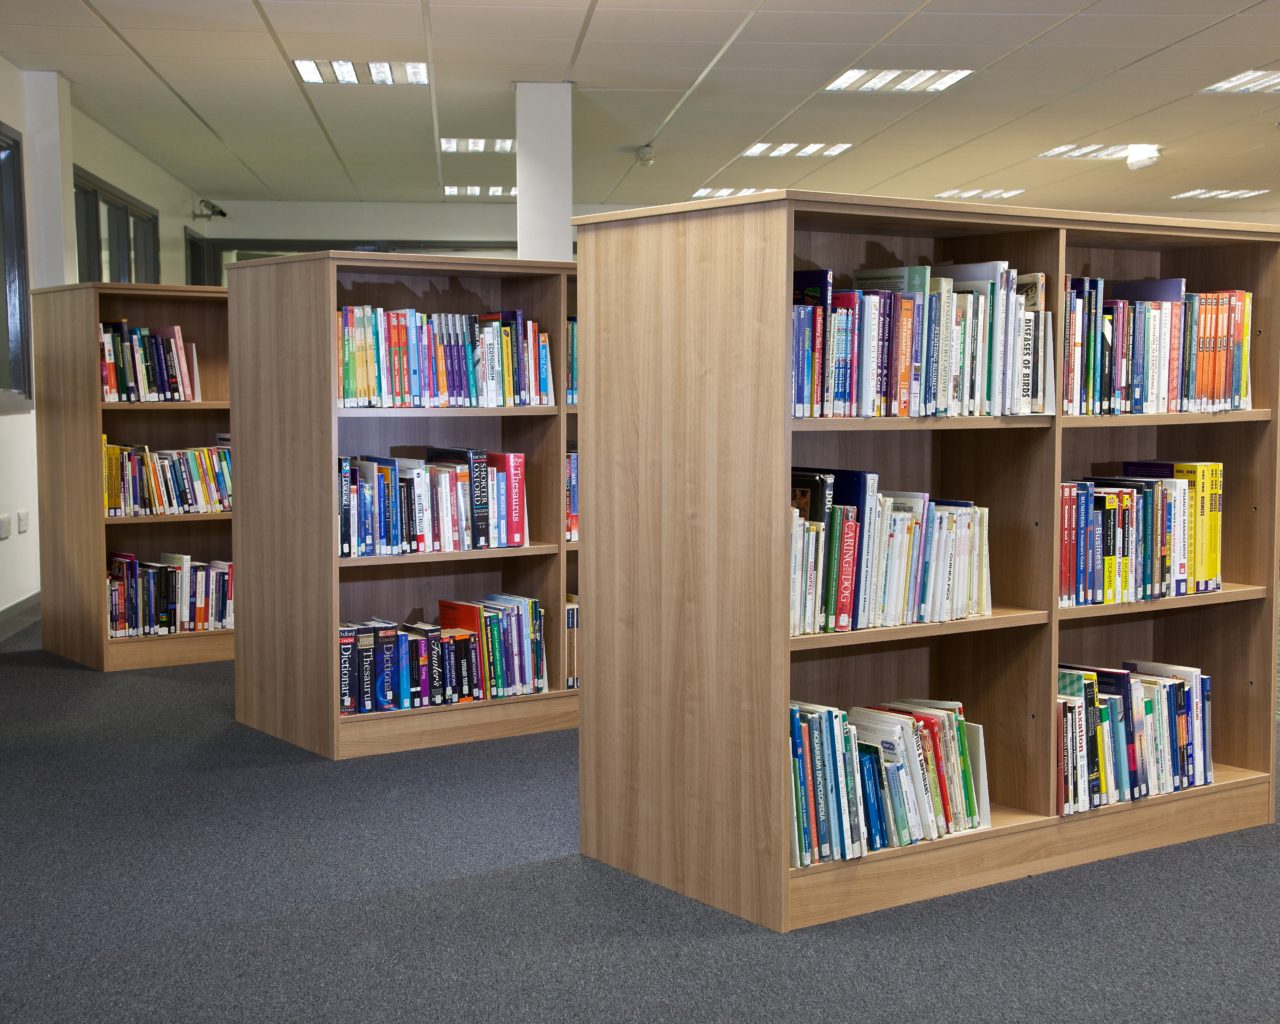 School libraries Lancashire, Bolton, Manchester Cheshire, Liverpool, Leeds, UK